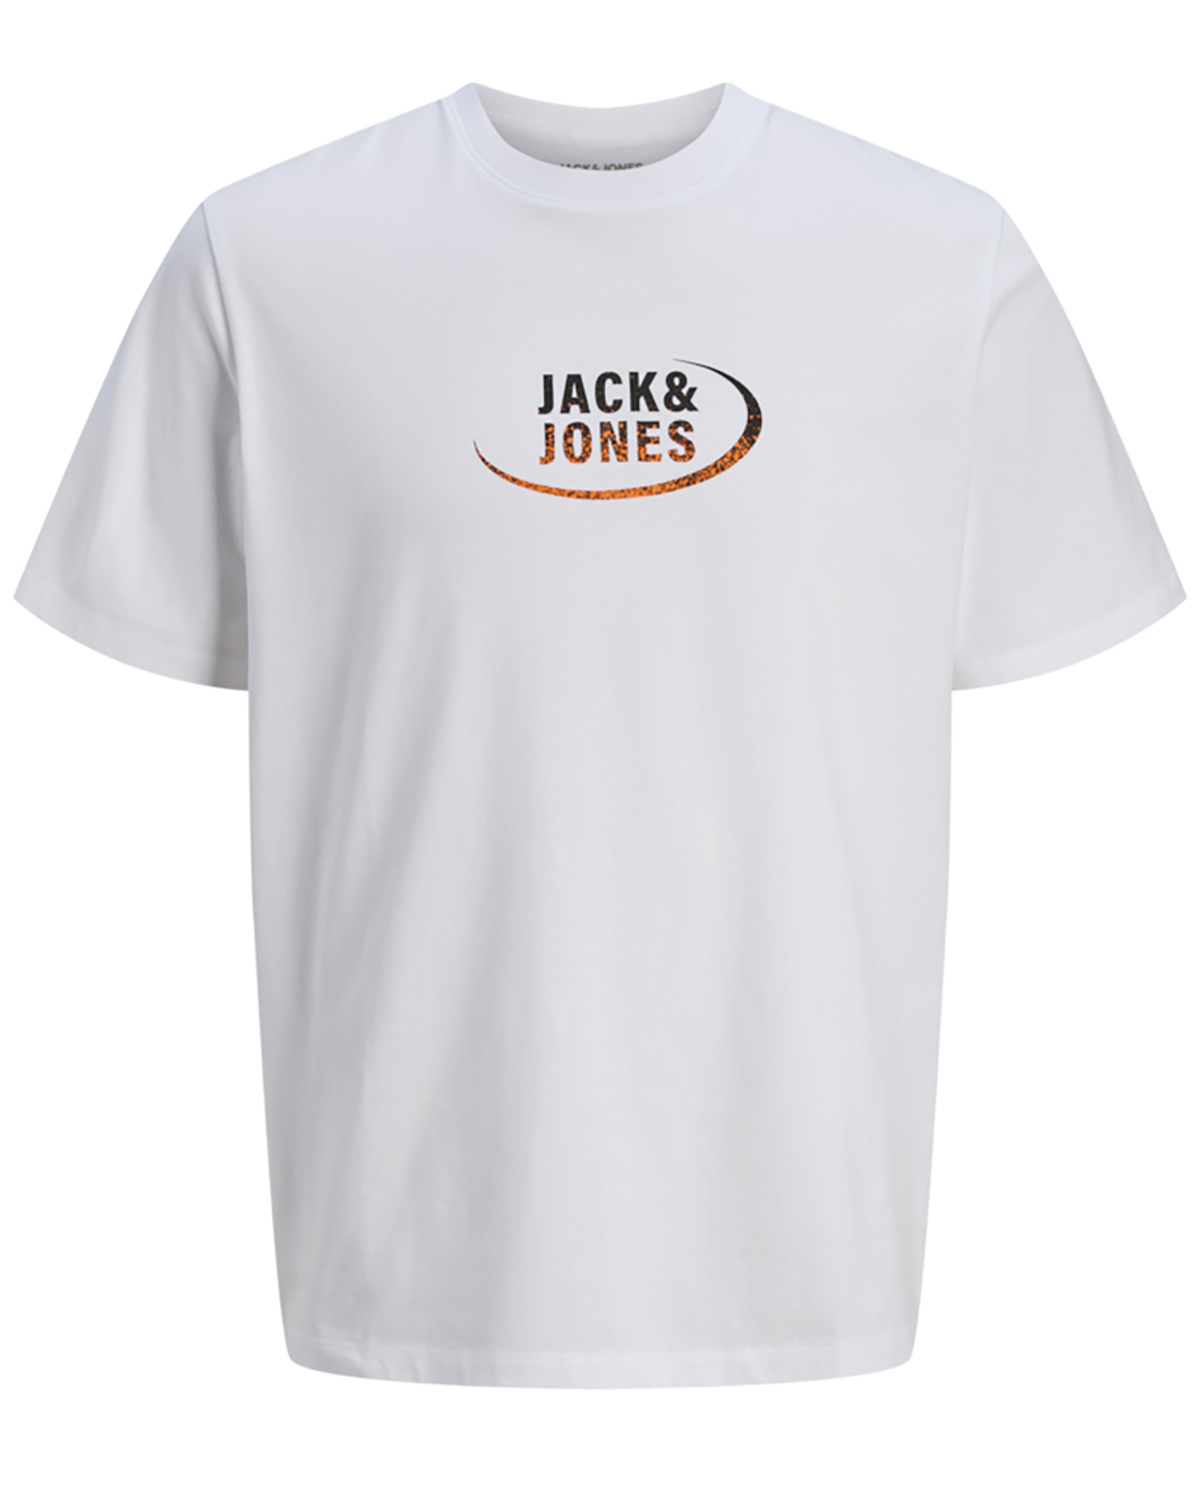 Se Jack & Jones t-shirt s/s, Gradient tee, hvid - 182,M+,M hos Umame.dk